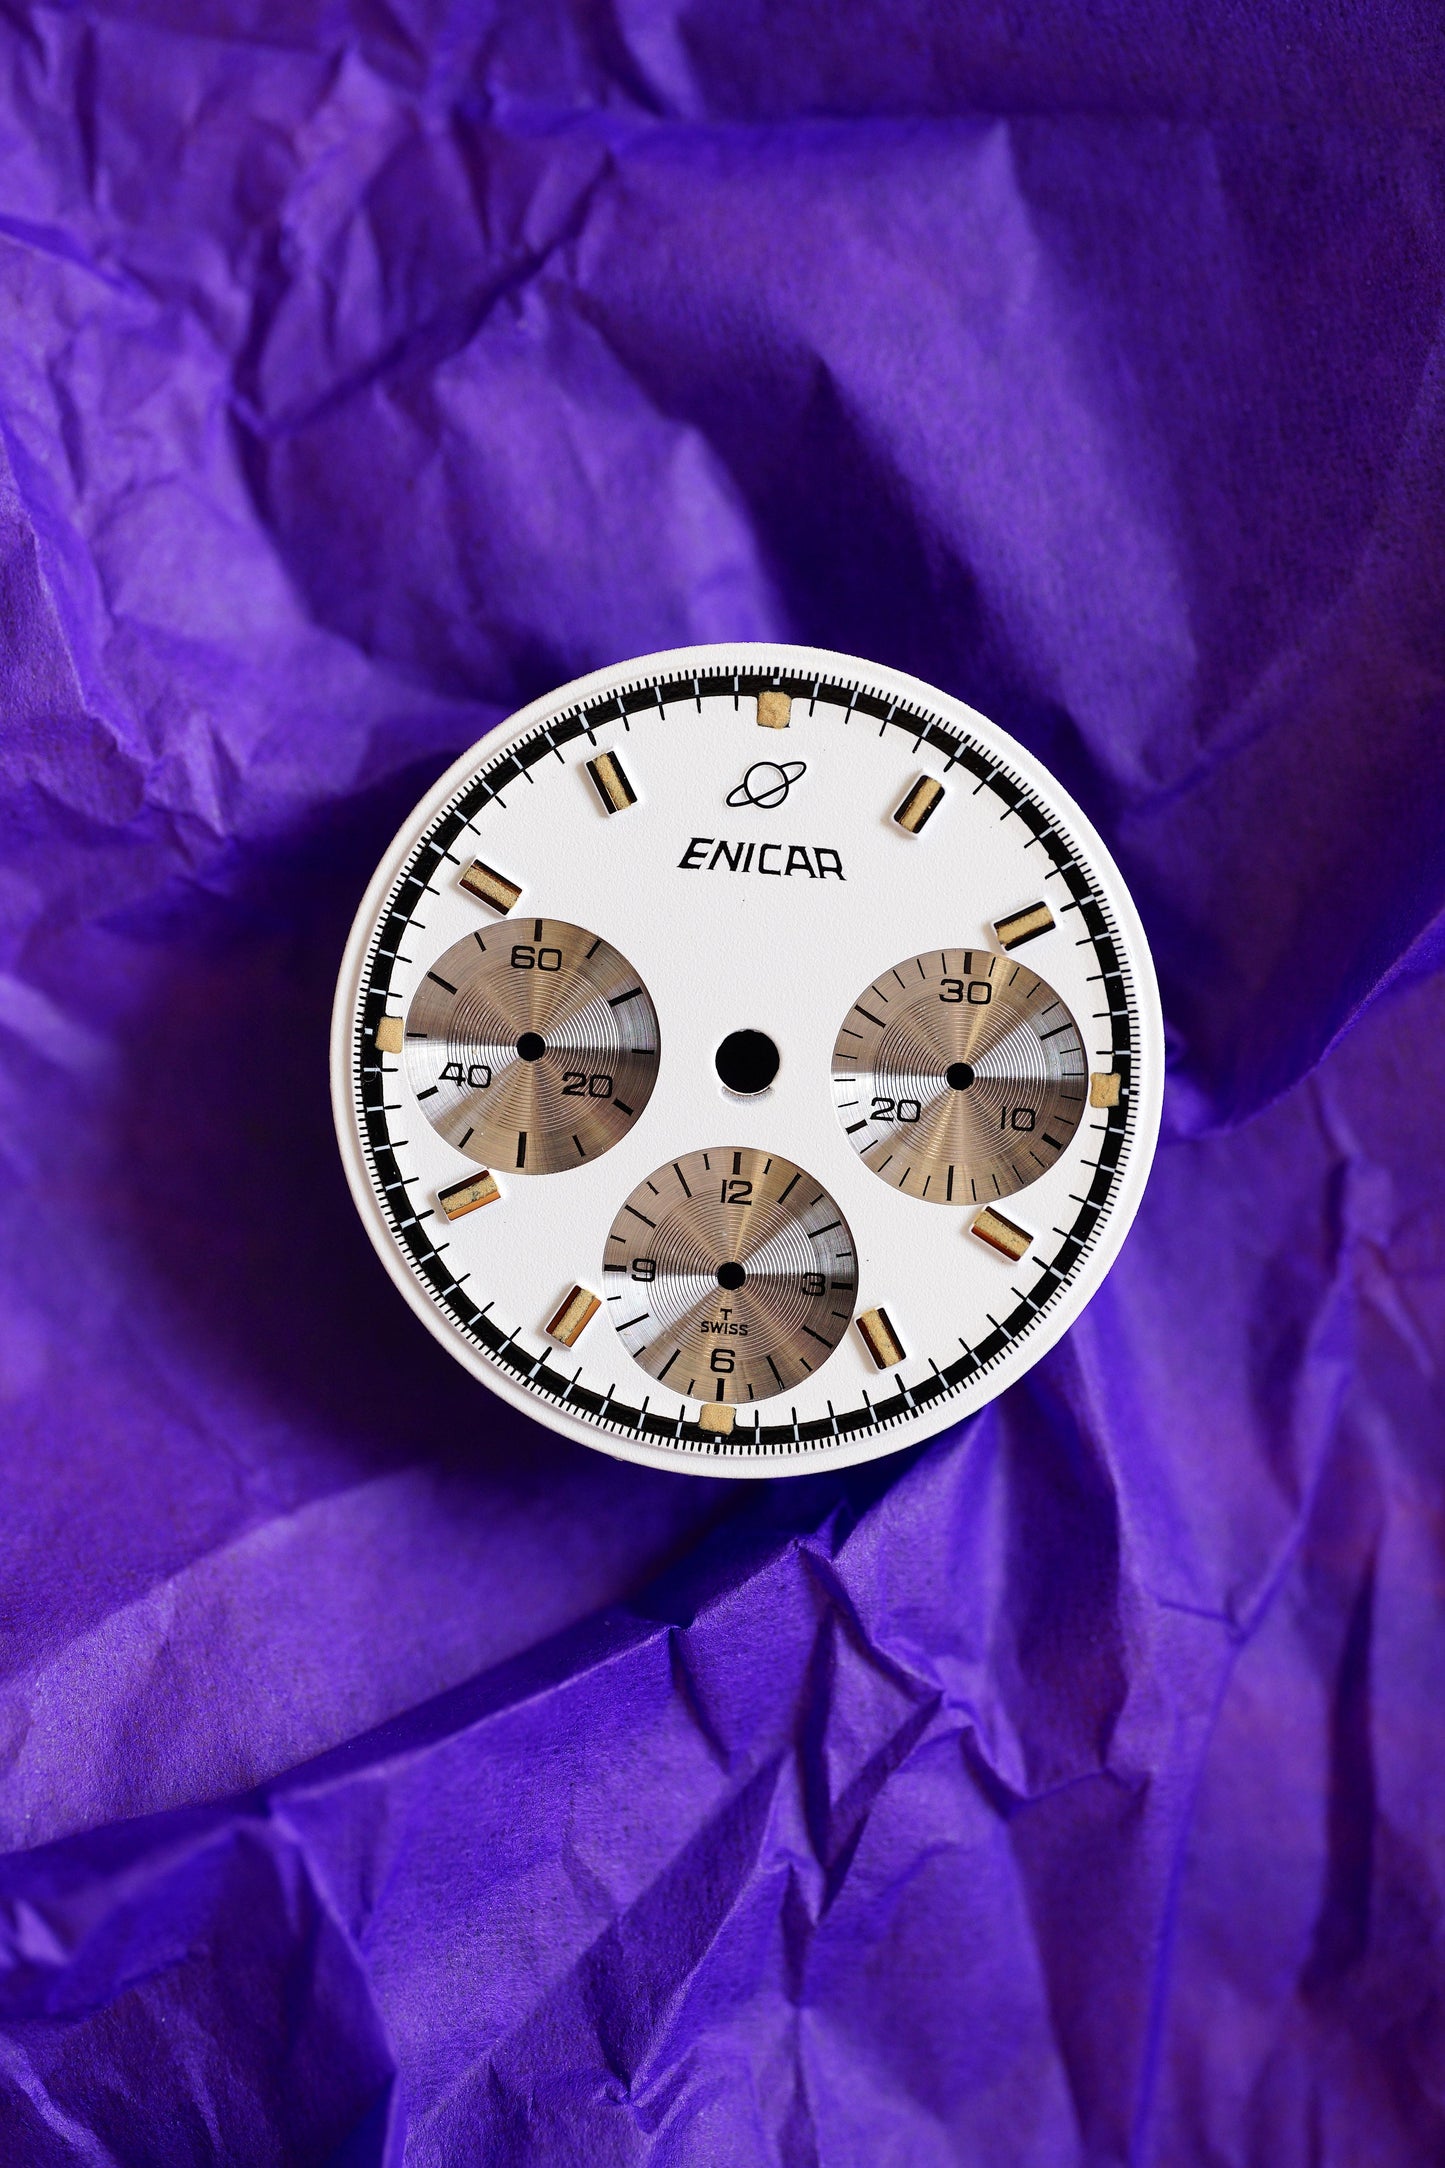 Enicar NOS white dial for vintage chronograph Tritium